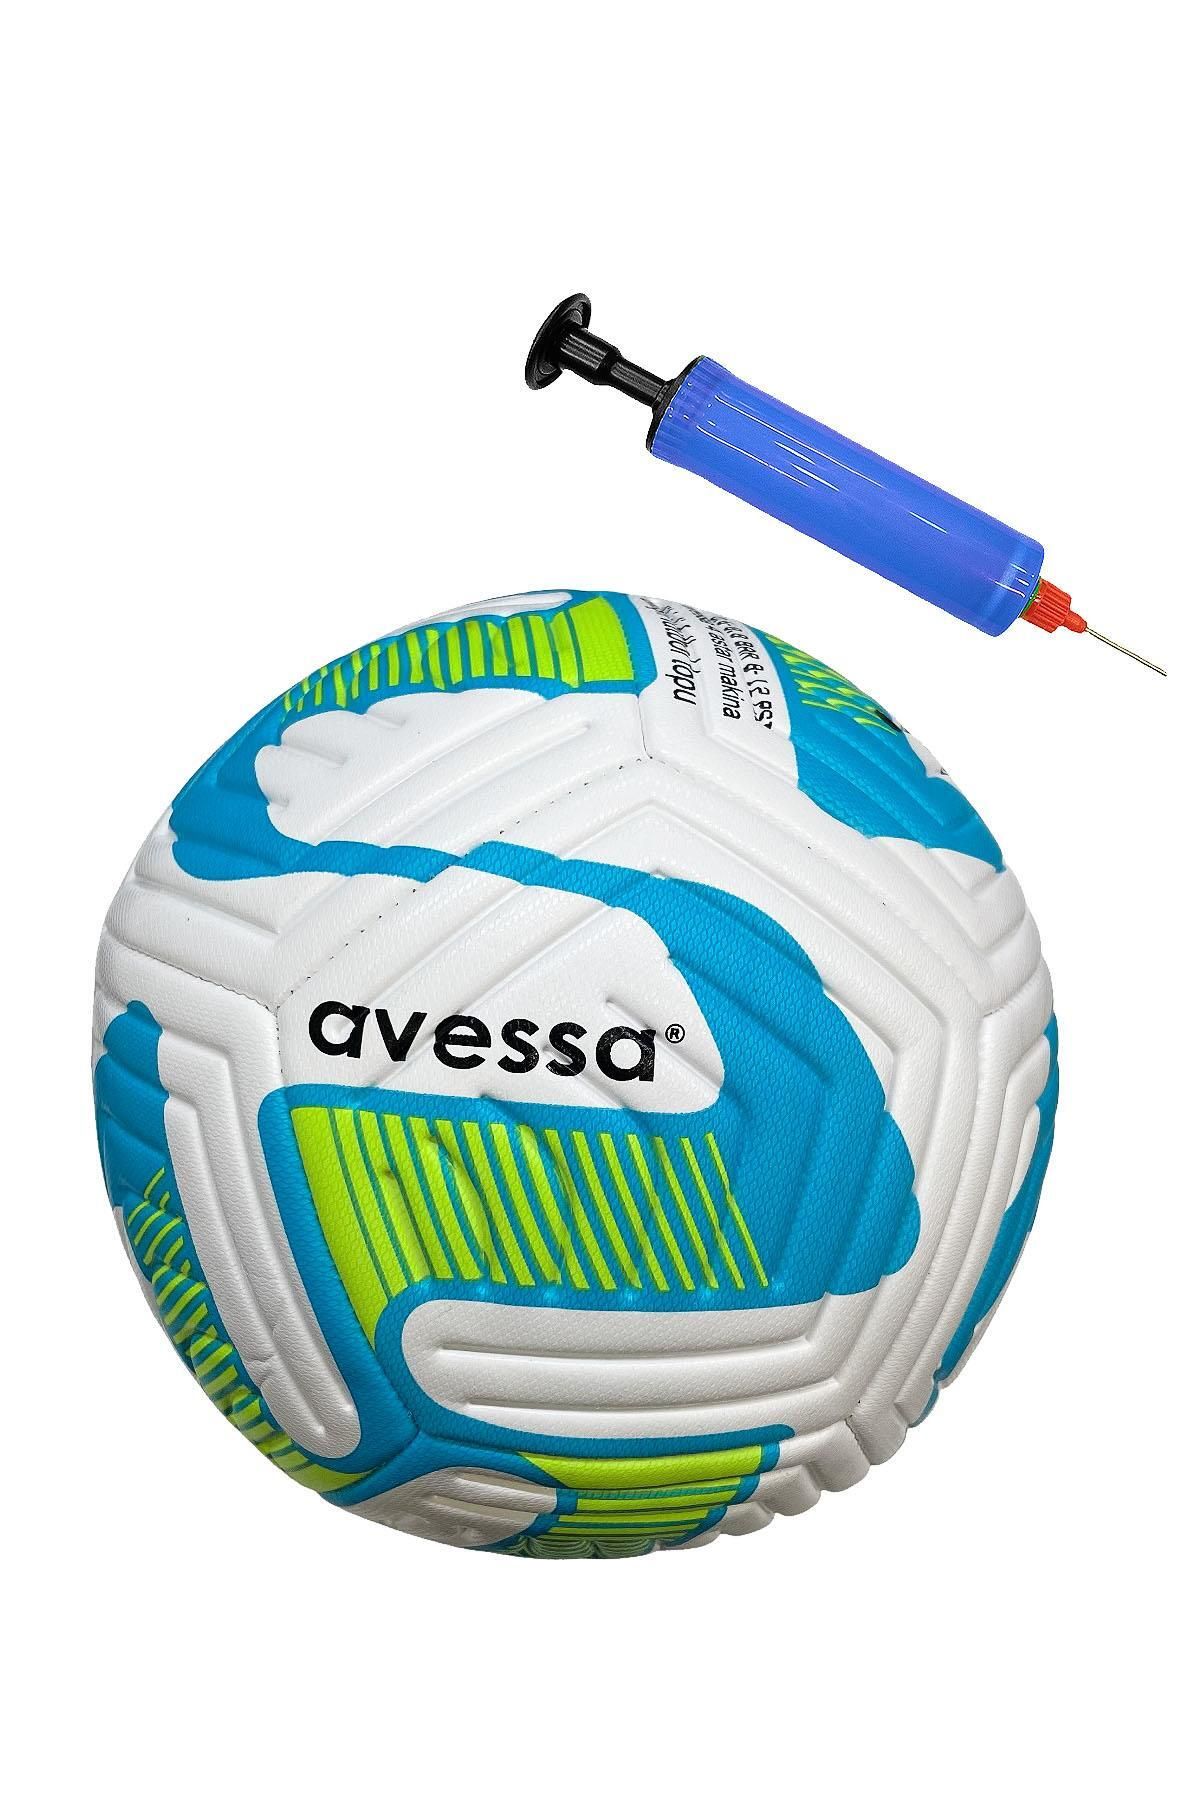 Avessa FT900-110M Futbol Topu Açık Mavi 4 Astar Pompalı